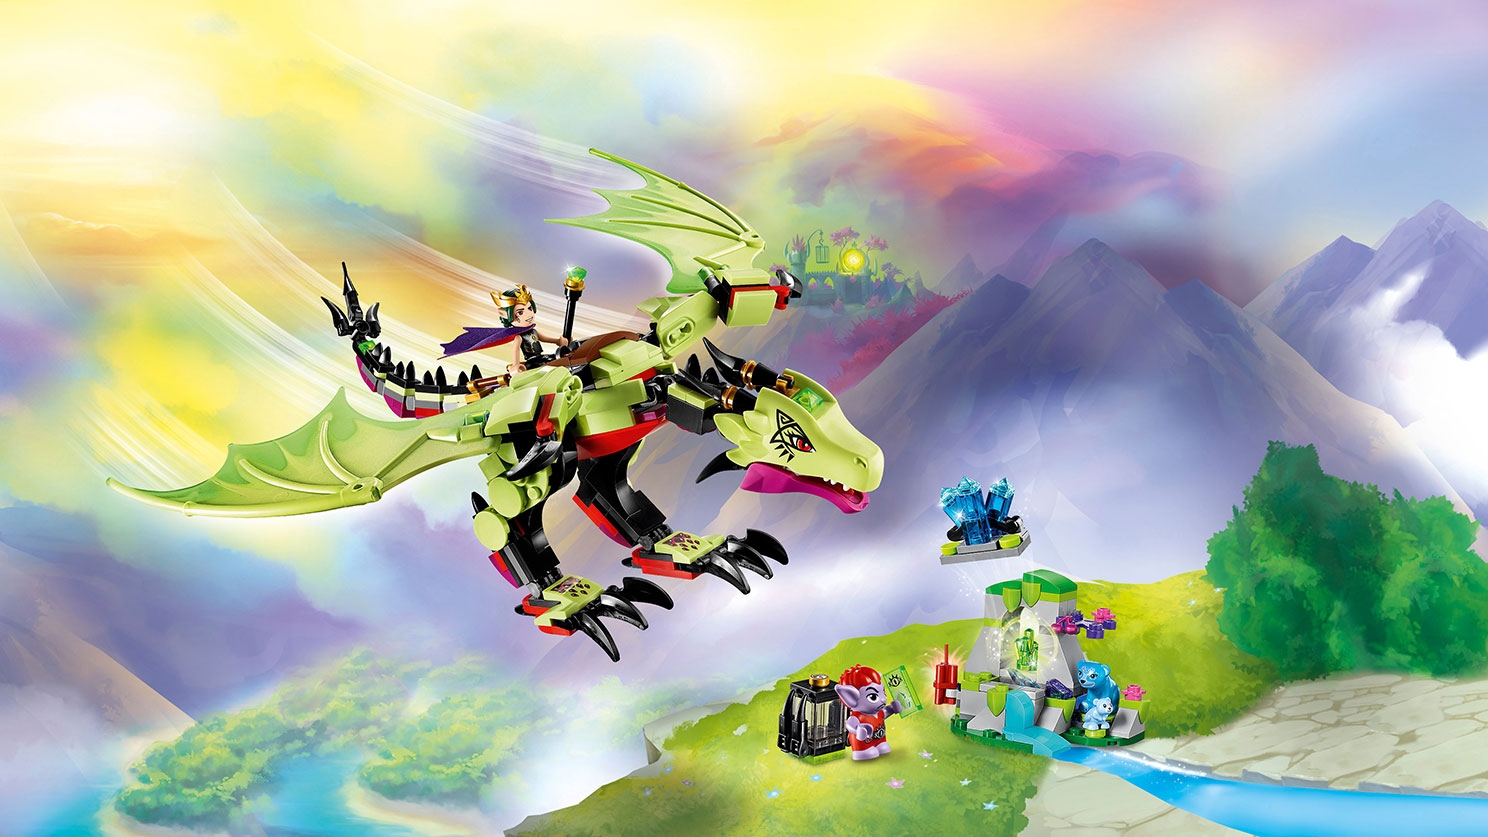 The Goblin King's Evil Dragon 41183 - LEGO® Sets LEGO.com kids